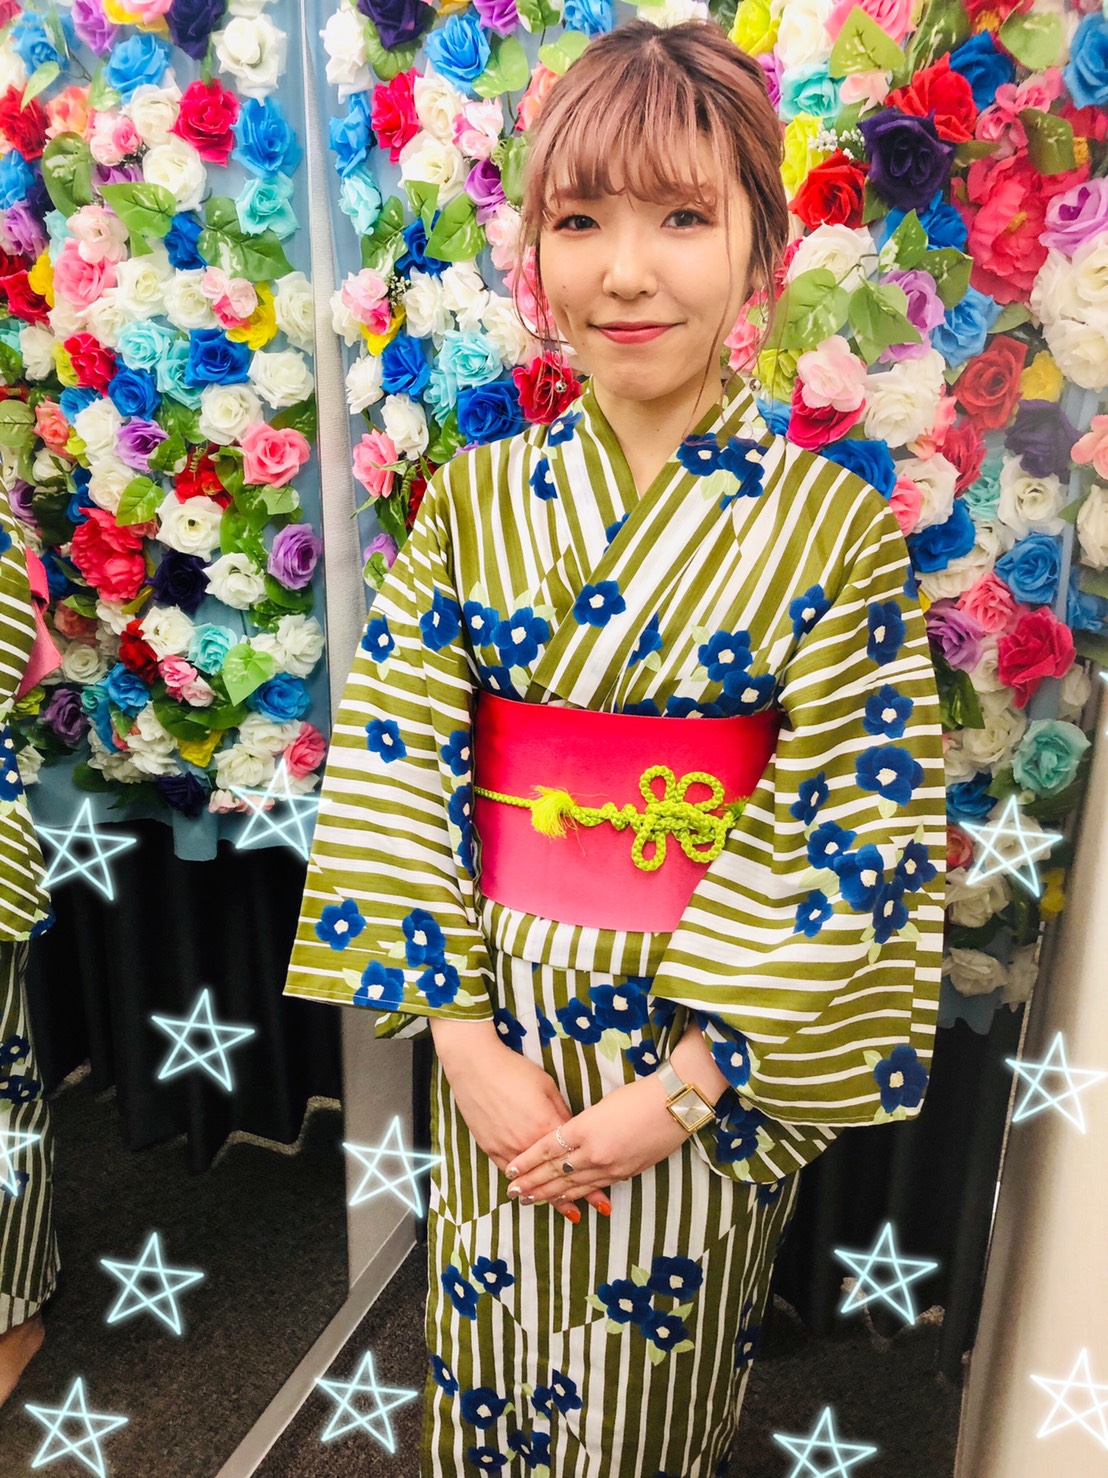 Shop Topics 持ち込み浴衣 浴衣レンタルvasara渋谷店 渋谷で着物 浴衣を楽しむなら 着物レンタルvasara